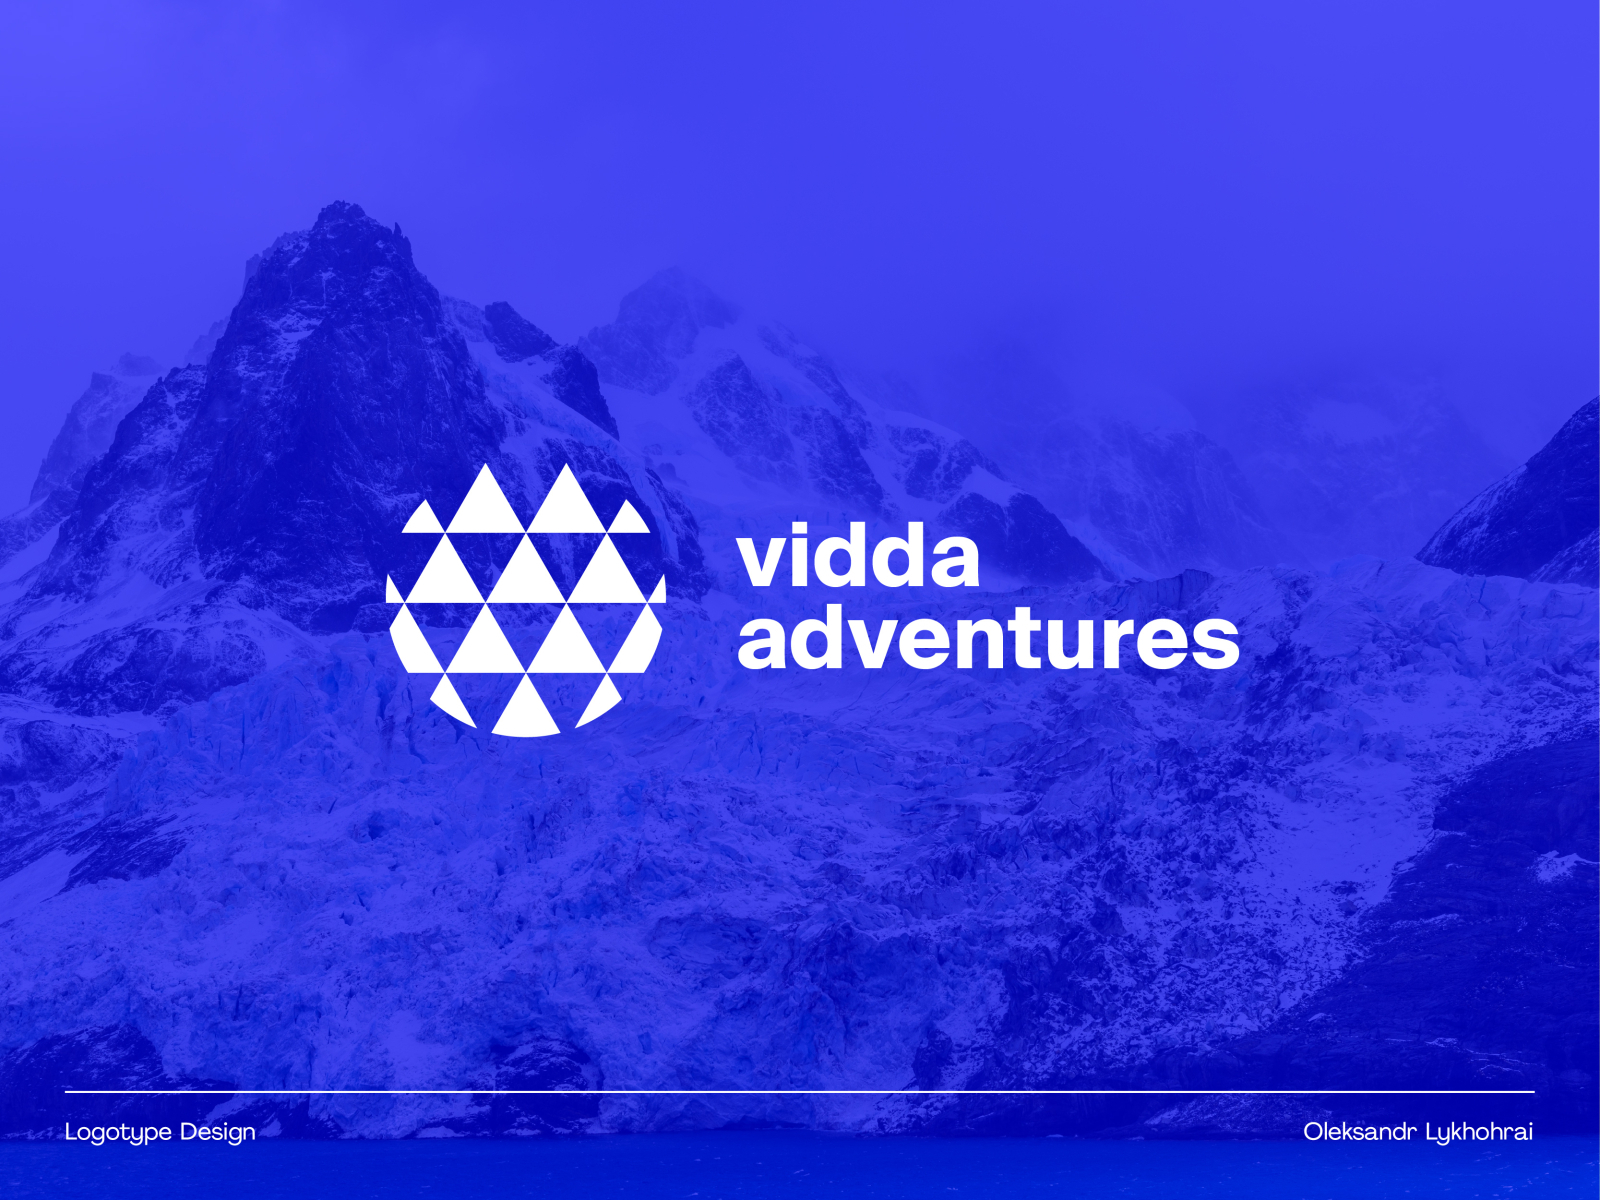 Vidda Adventures Travel Agency Logo by Oleksandr Lykhohrai on Dribbble